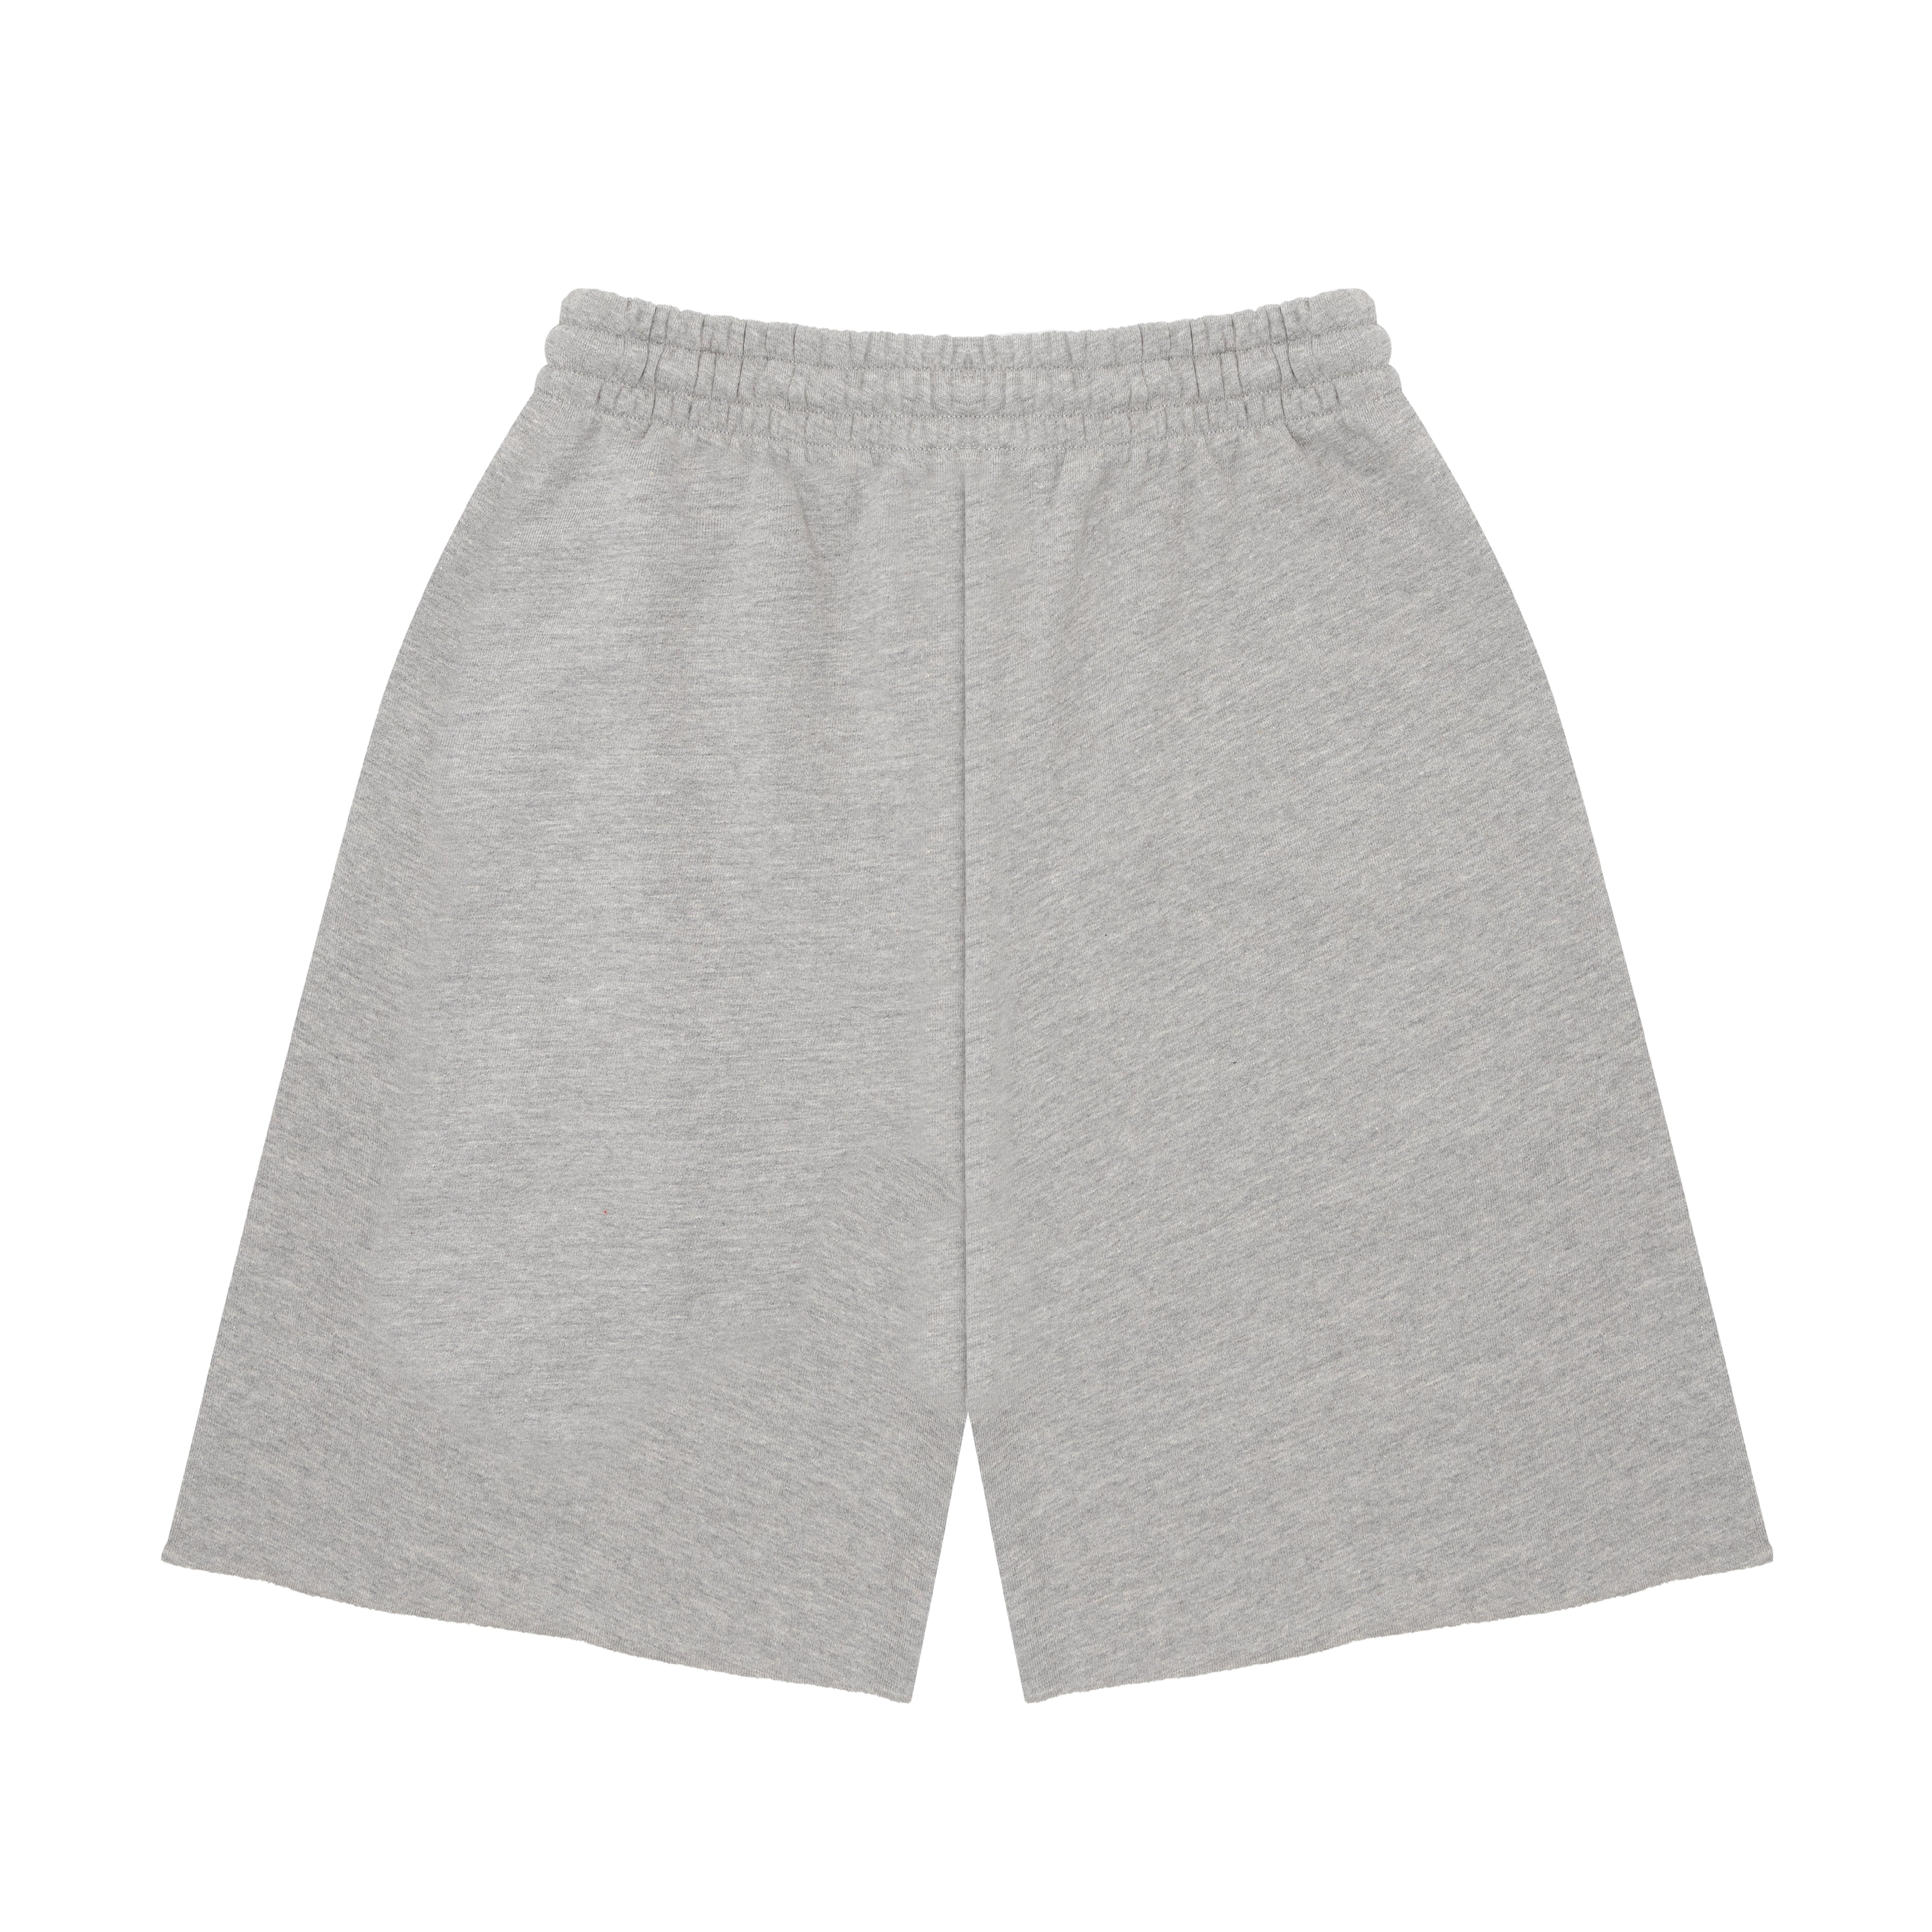 Denim Tears - Men's Denim University Sweat Shorts - (Grey)